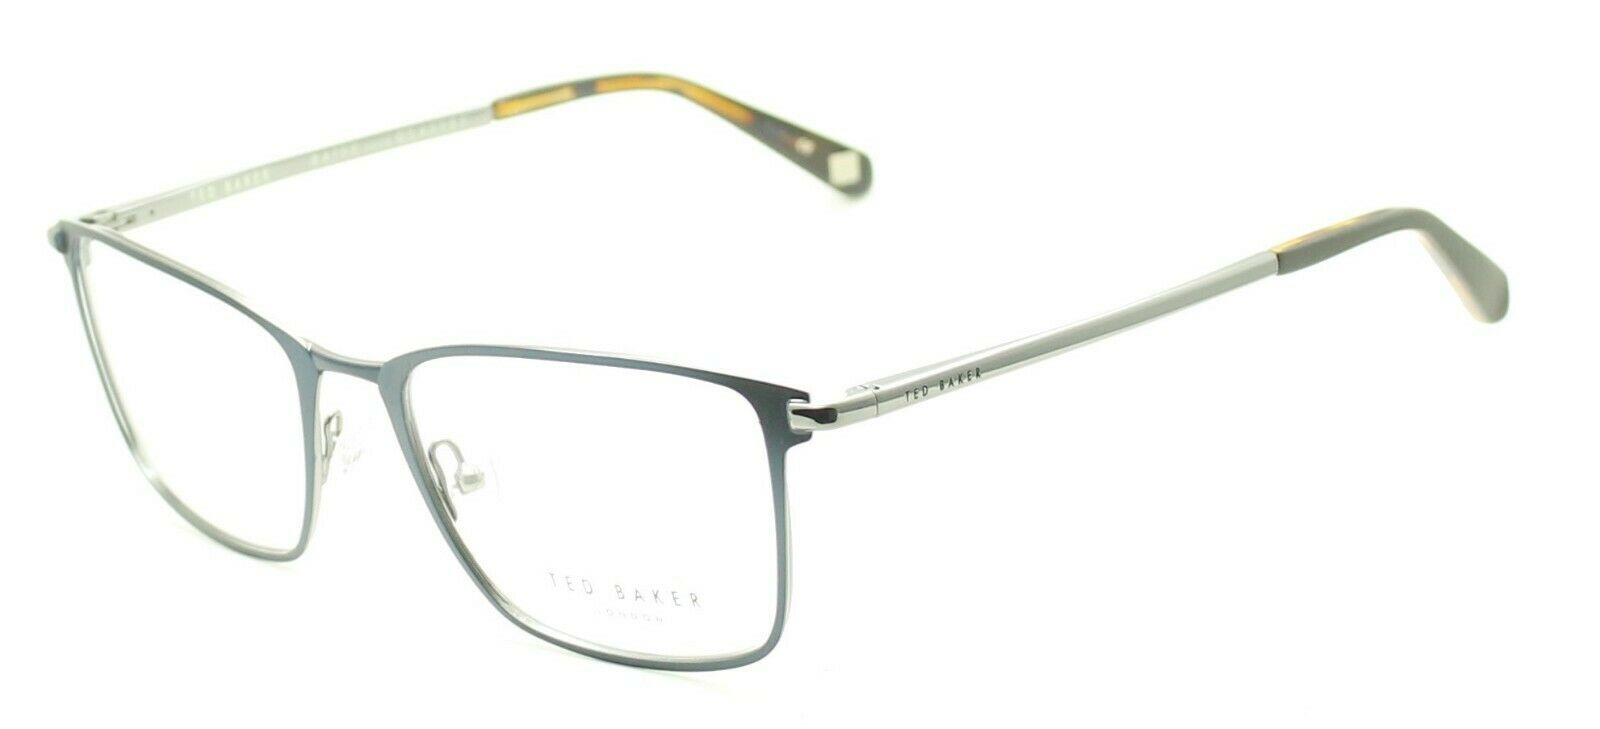 TED BAKER Drummond 4244 609 54mm FRAMES Glasses Eyeglasses RX Optical EyewearNew